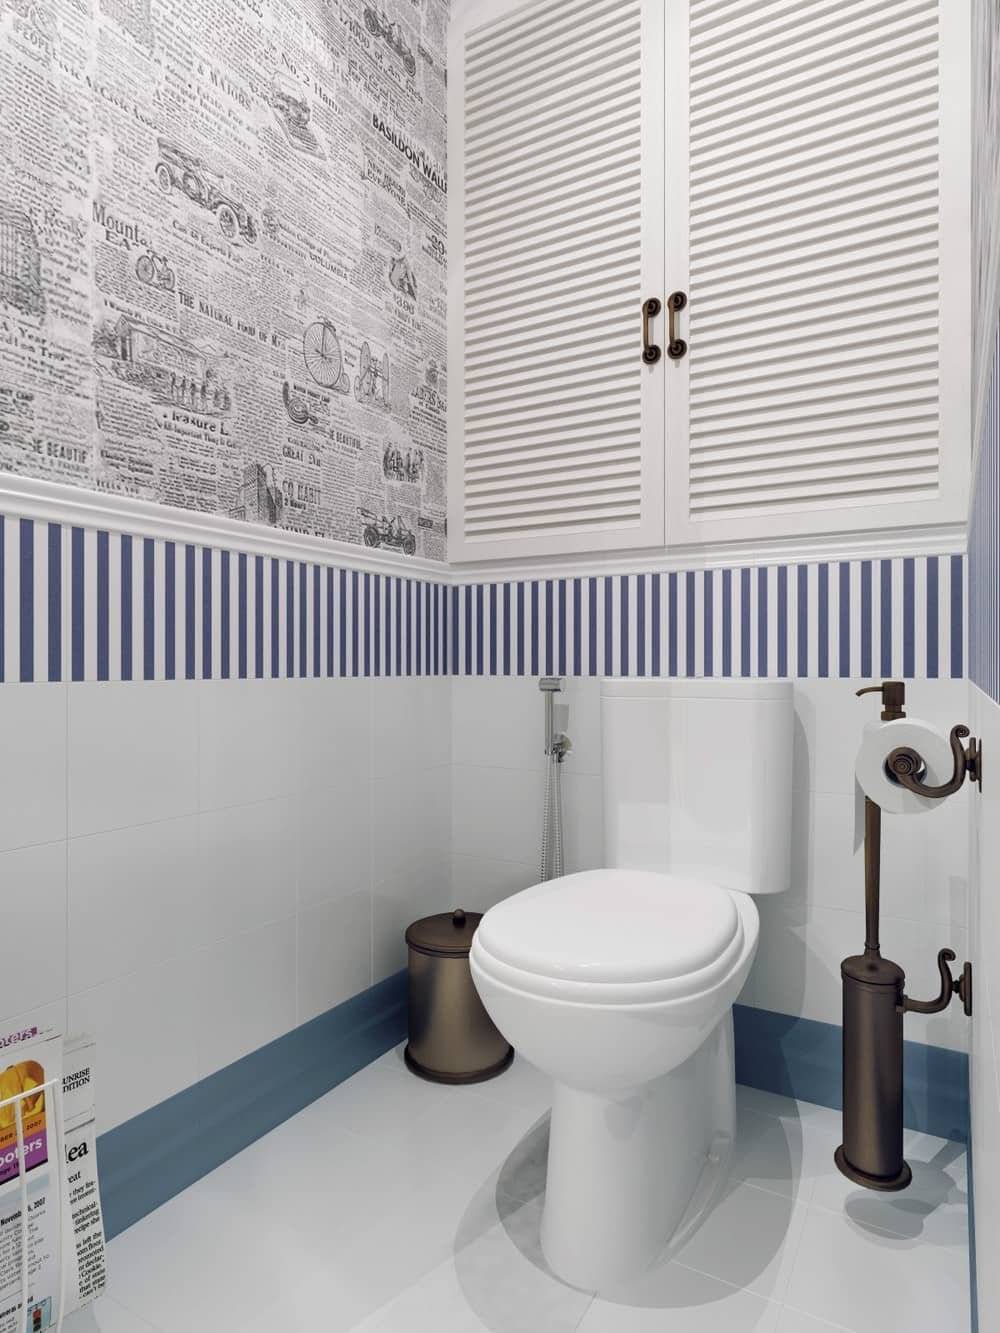 Дизайн туалетной комнаты панелями фото дизайн